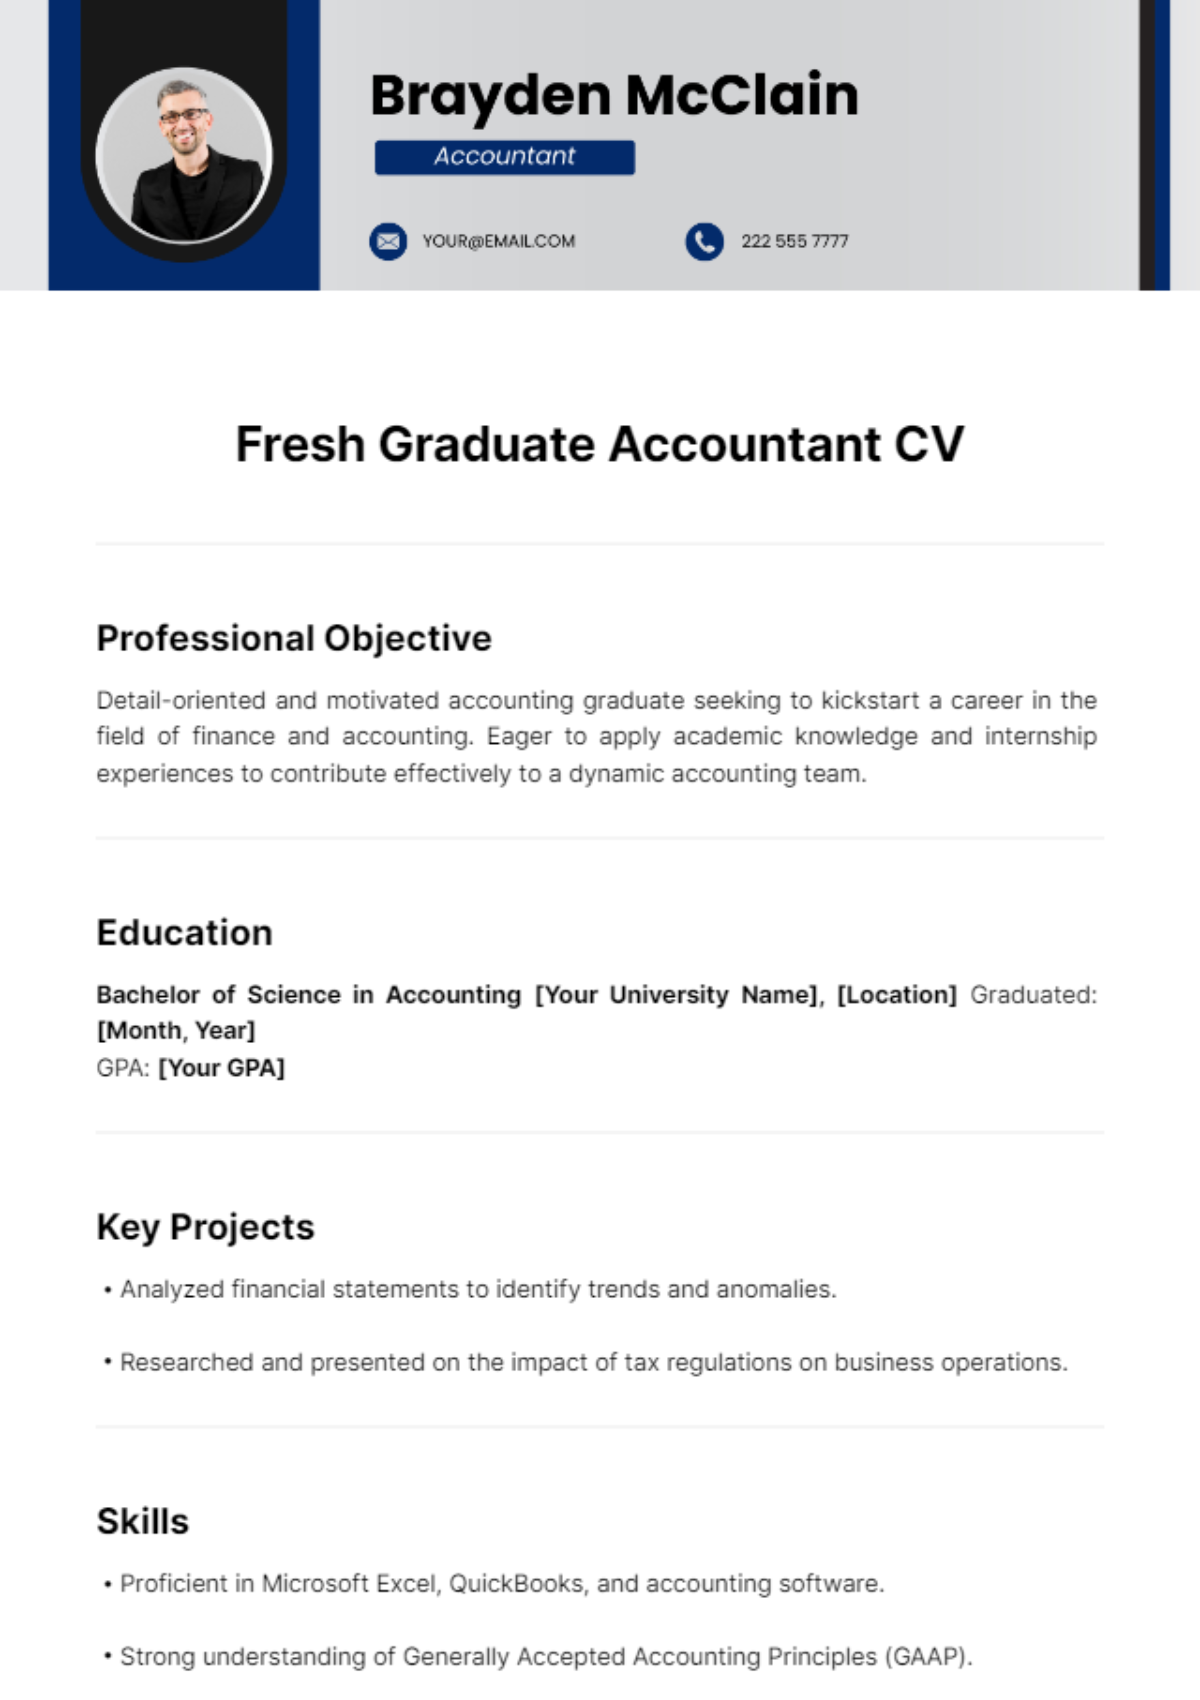 Fresh Graduate Accountant CV Template